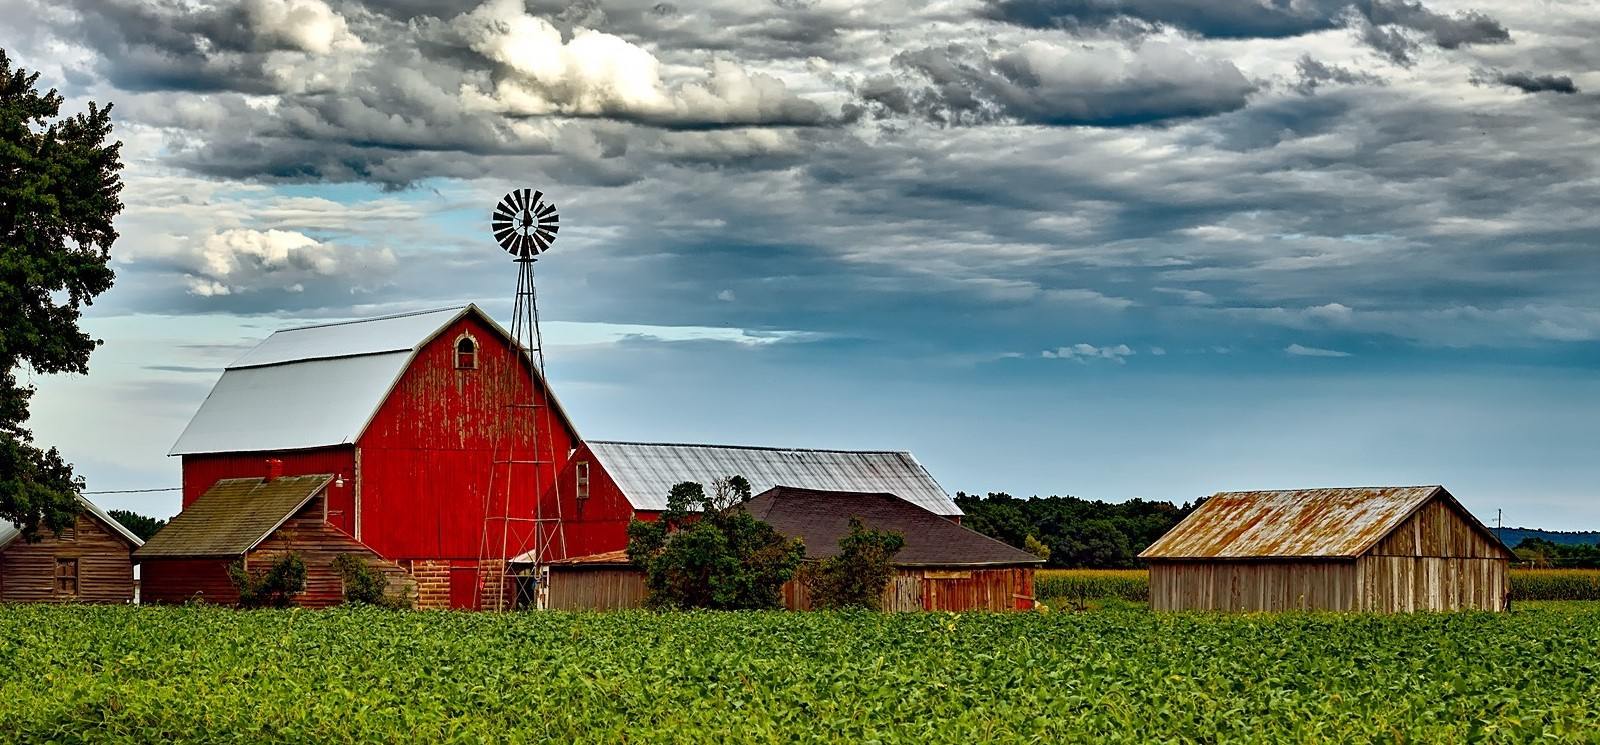 farm scene with red barn